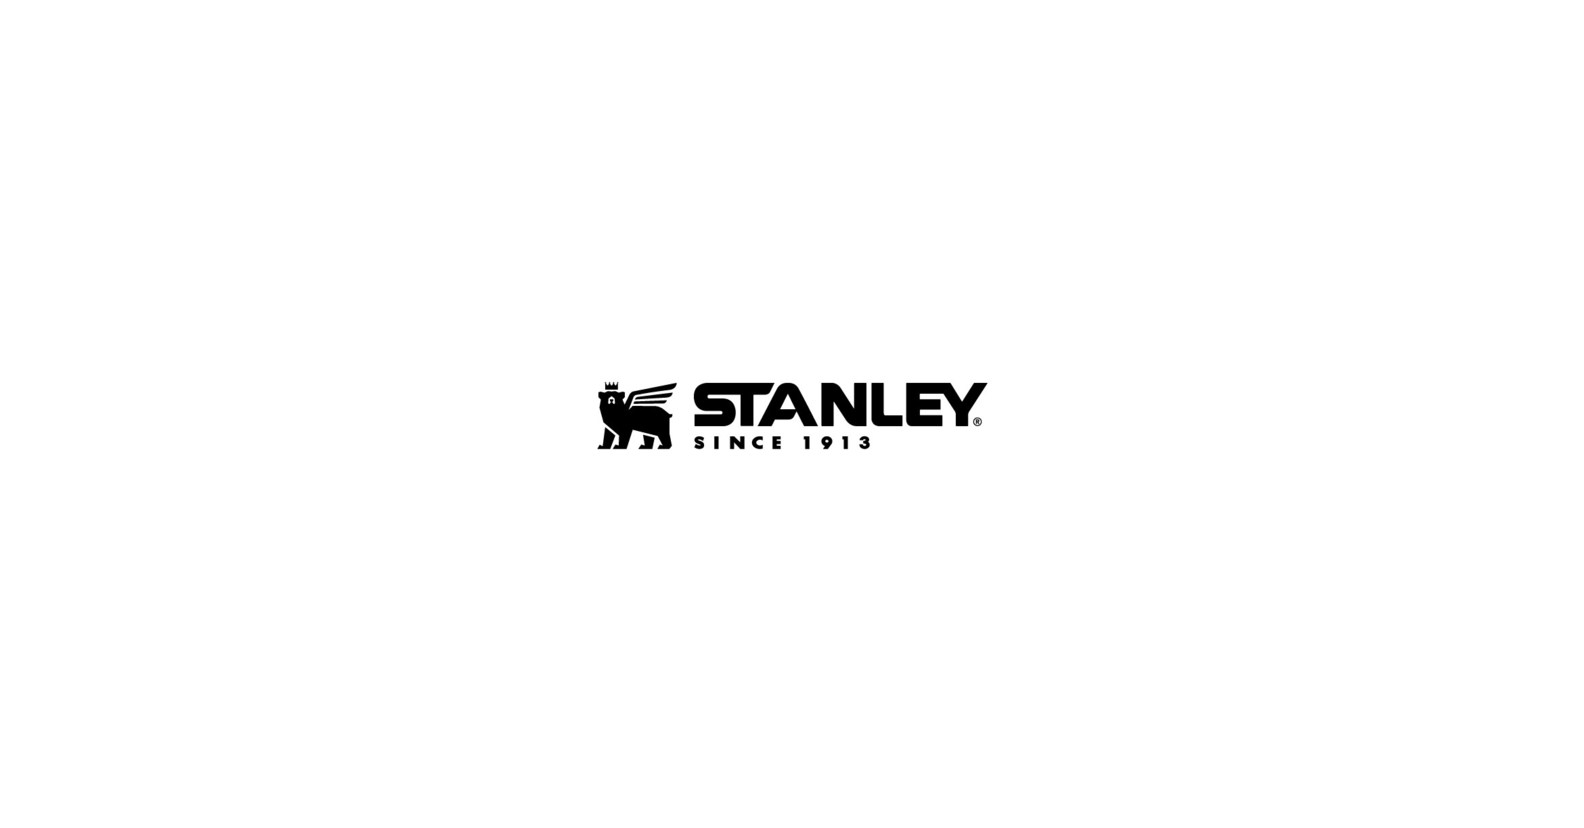 https://mma.prnewswire.com/media/1526362/Stanley_Logo.jpg?p=facebook